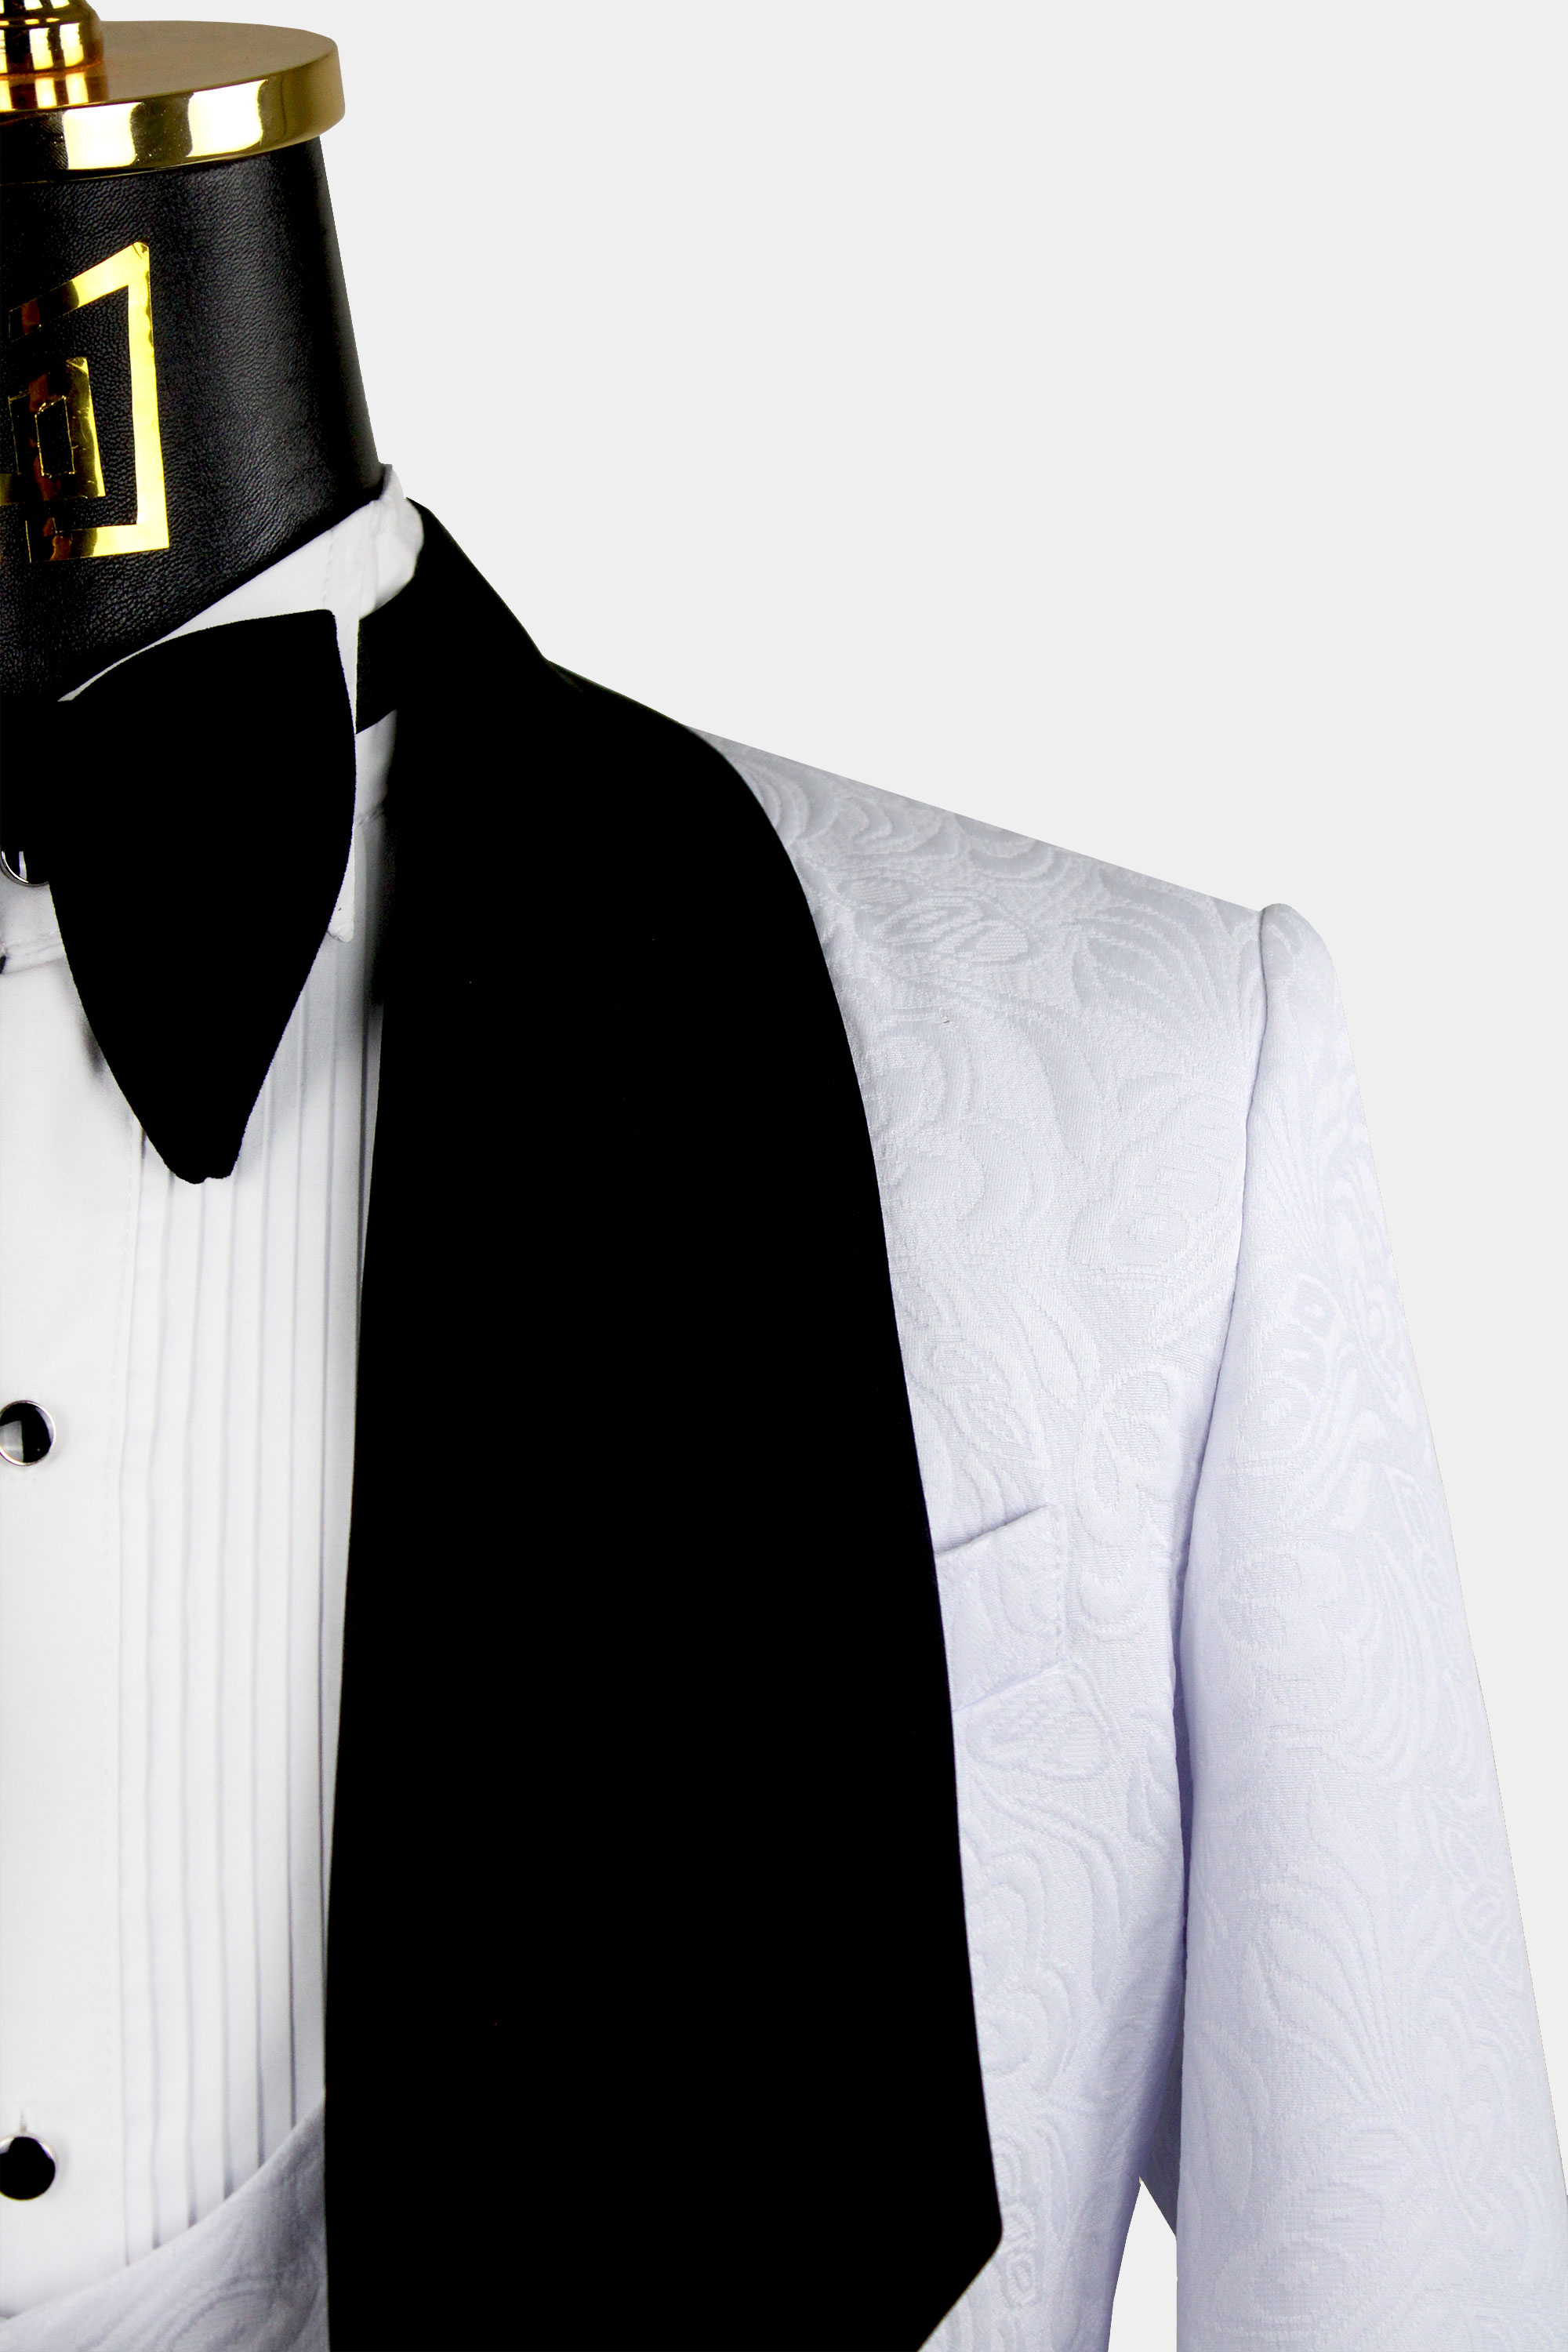 White-and-Black-Floral-Tuxedo-Suit-from-Gentlemansguru.com_